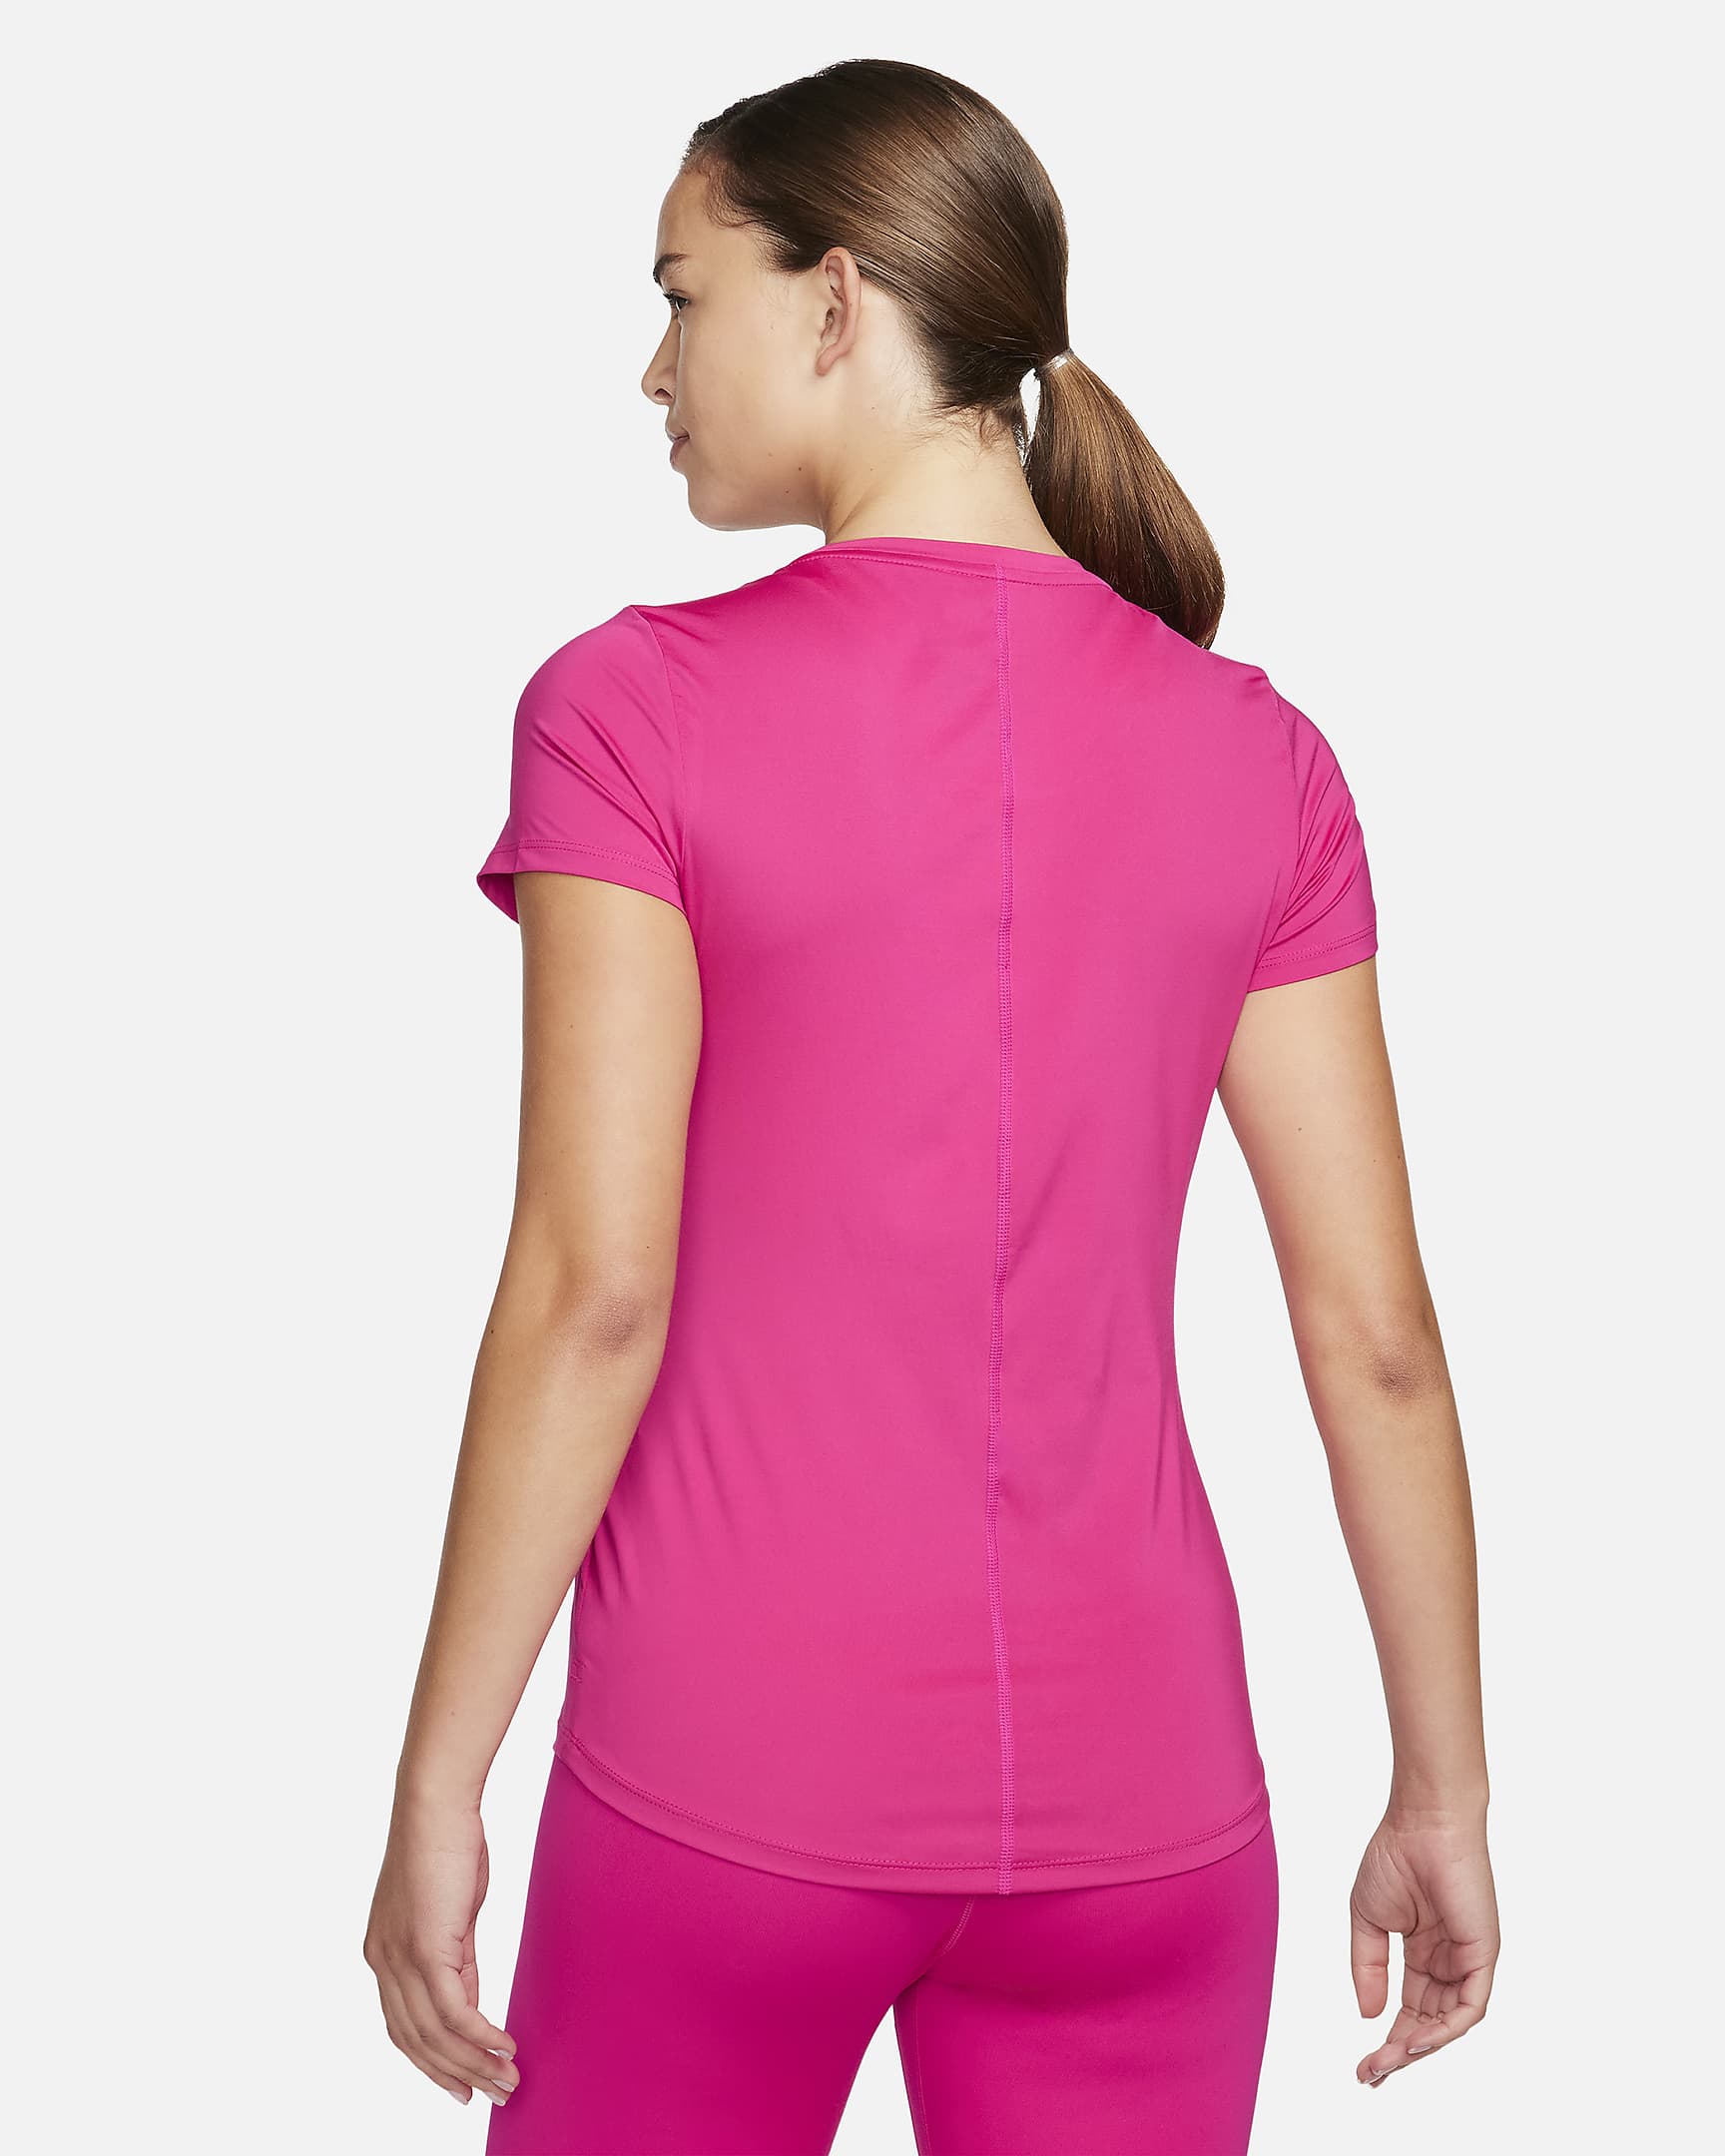 Nike Dri-FIT One Women's Slim-Fit Short-Sleeve Top. Nike HU